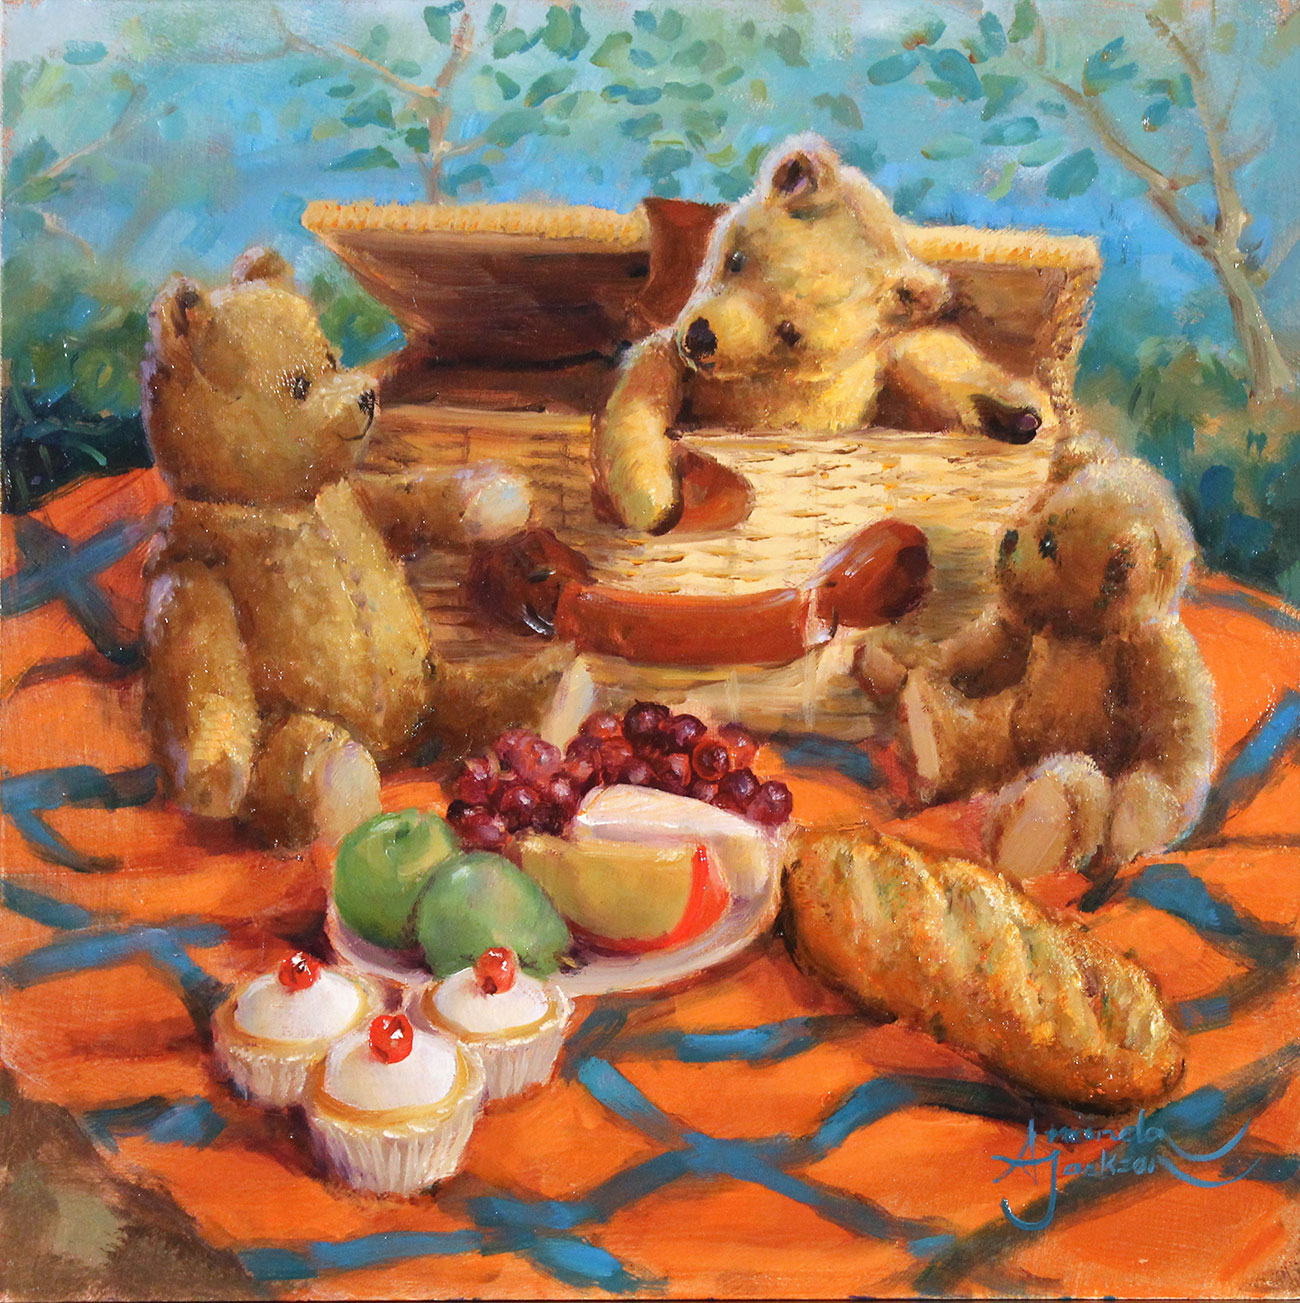 Amanda Jackson, Original oil painting on panel, The Bears' Picnic. Click to enlarge